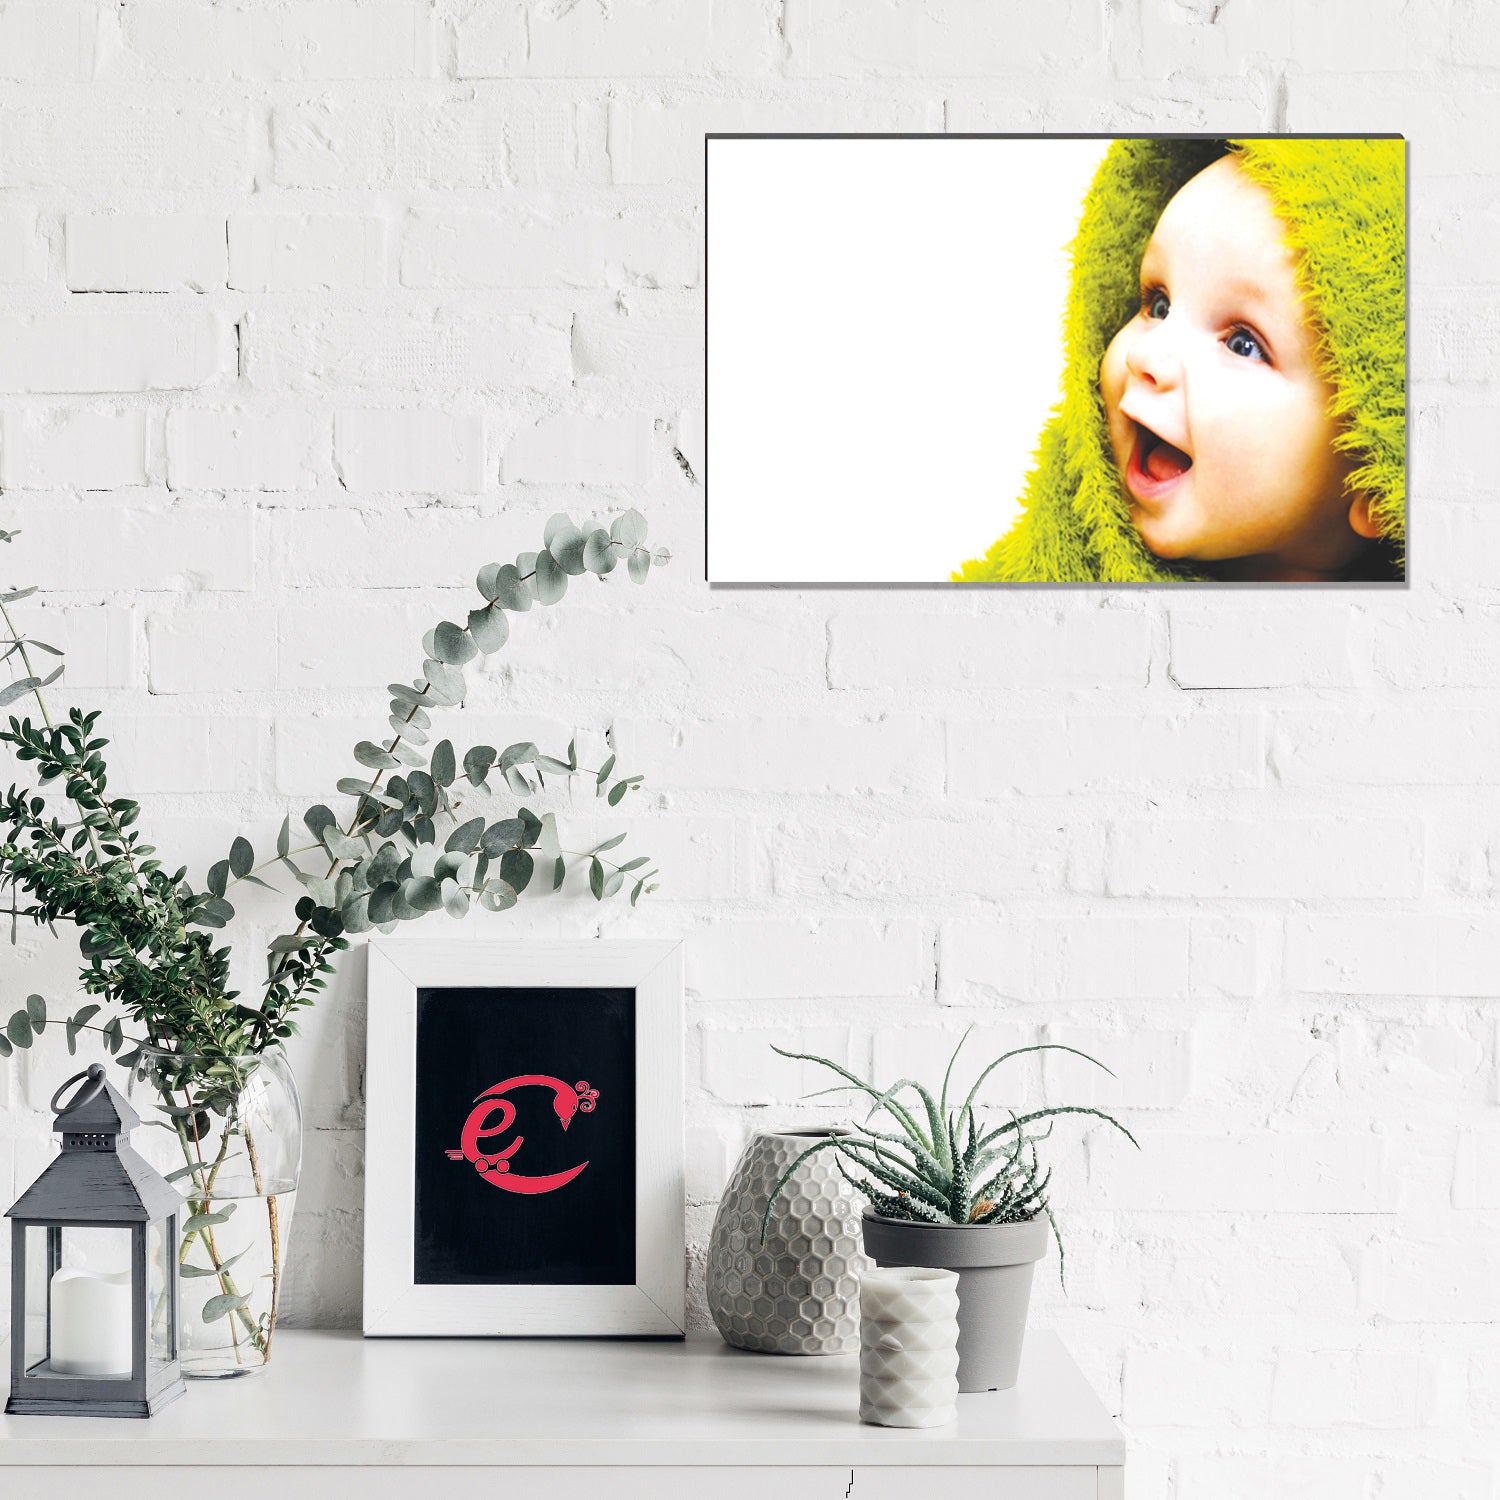 Cute Smiling Baby Painting Digital Printed Wall Art 1